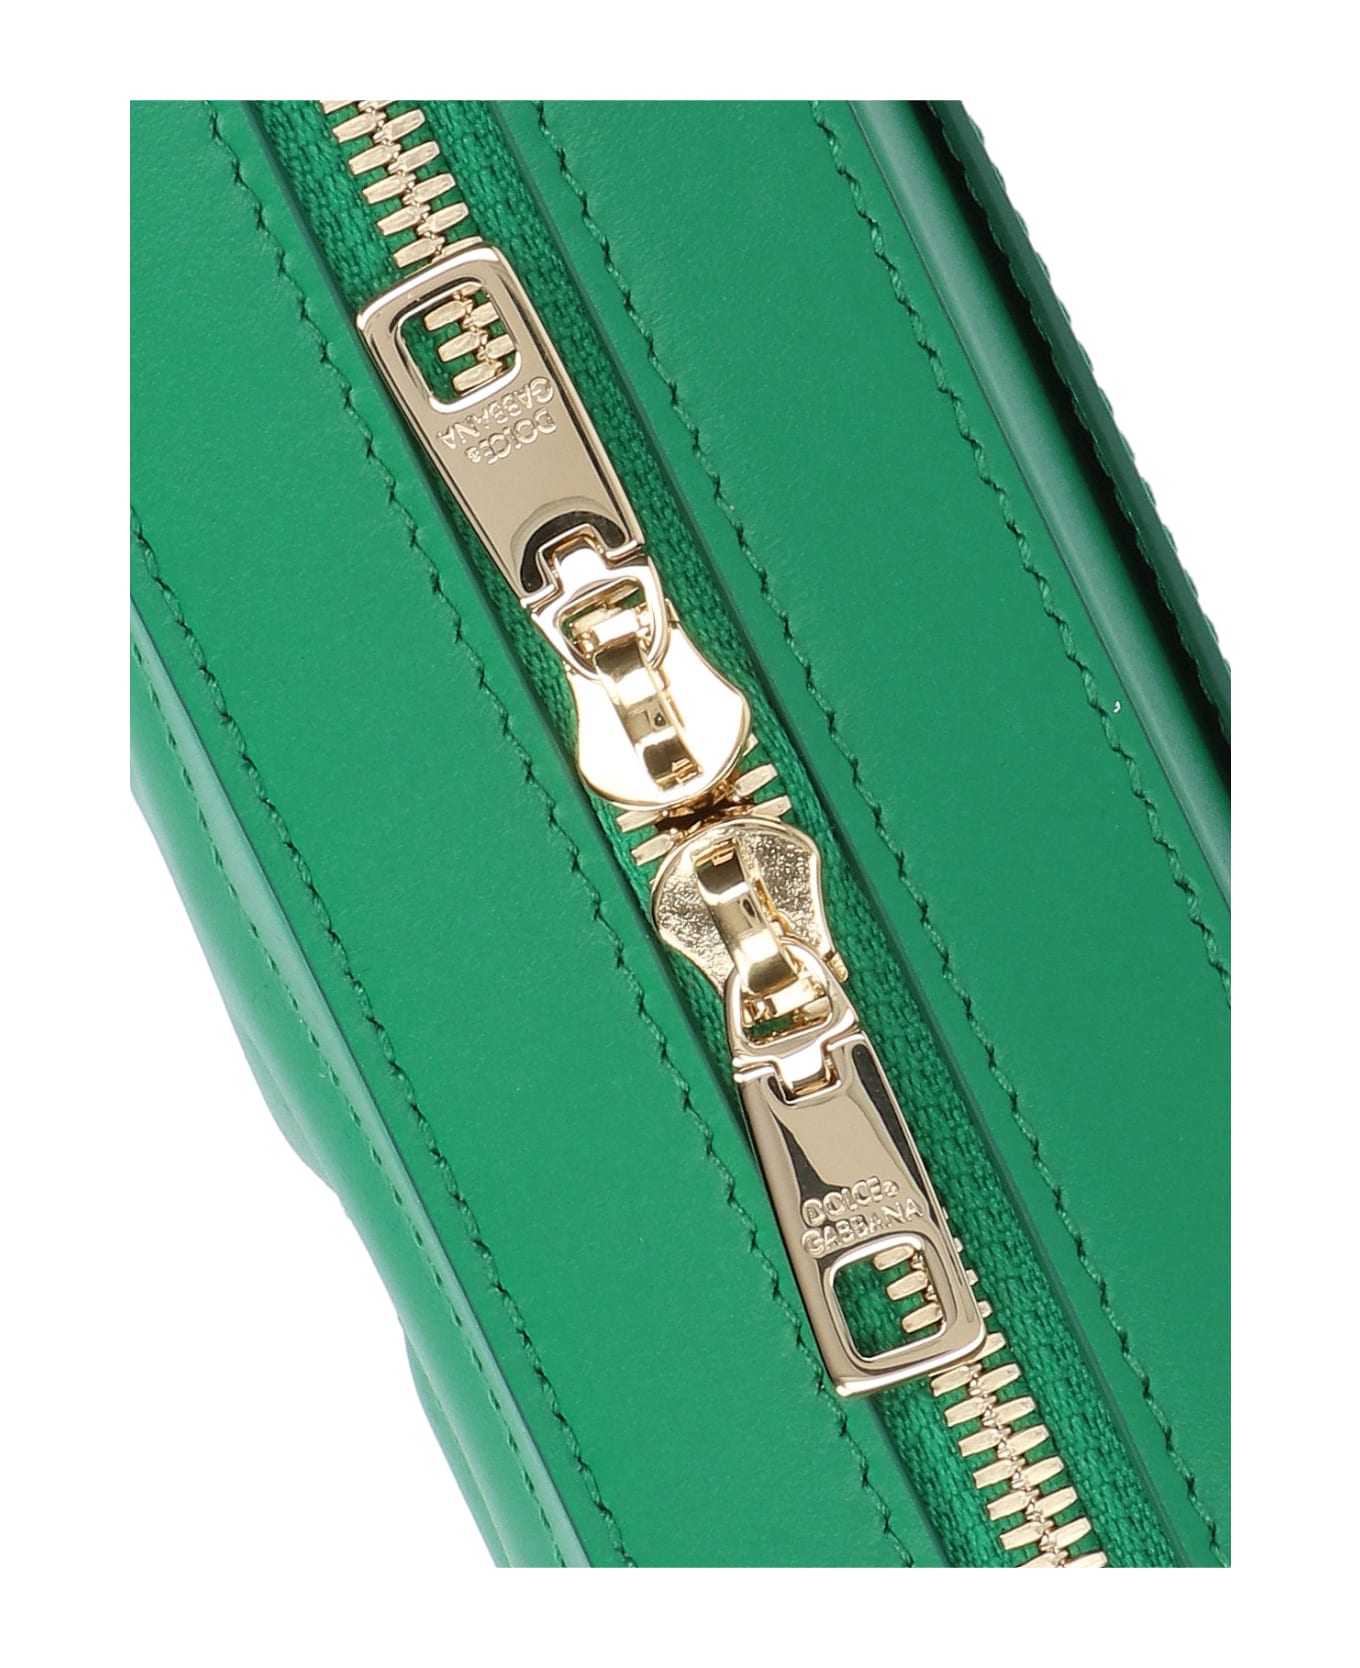 Dolce & Gabbana Camera Case Bag - Green クラッチバッグ